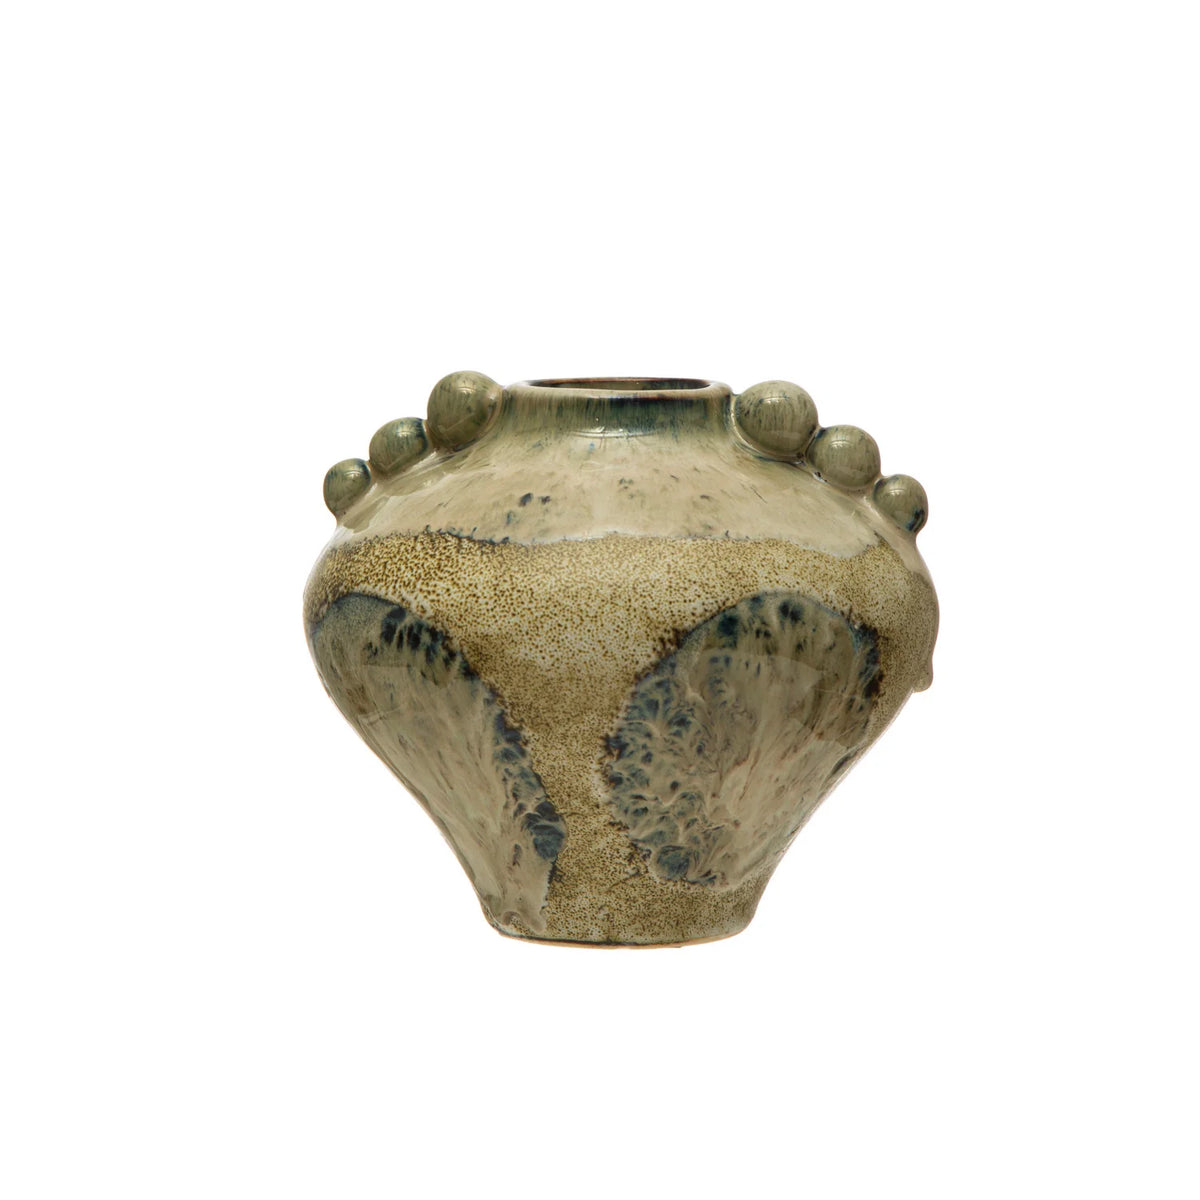 Stoneware Pottery Vase with Reactive Glaze